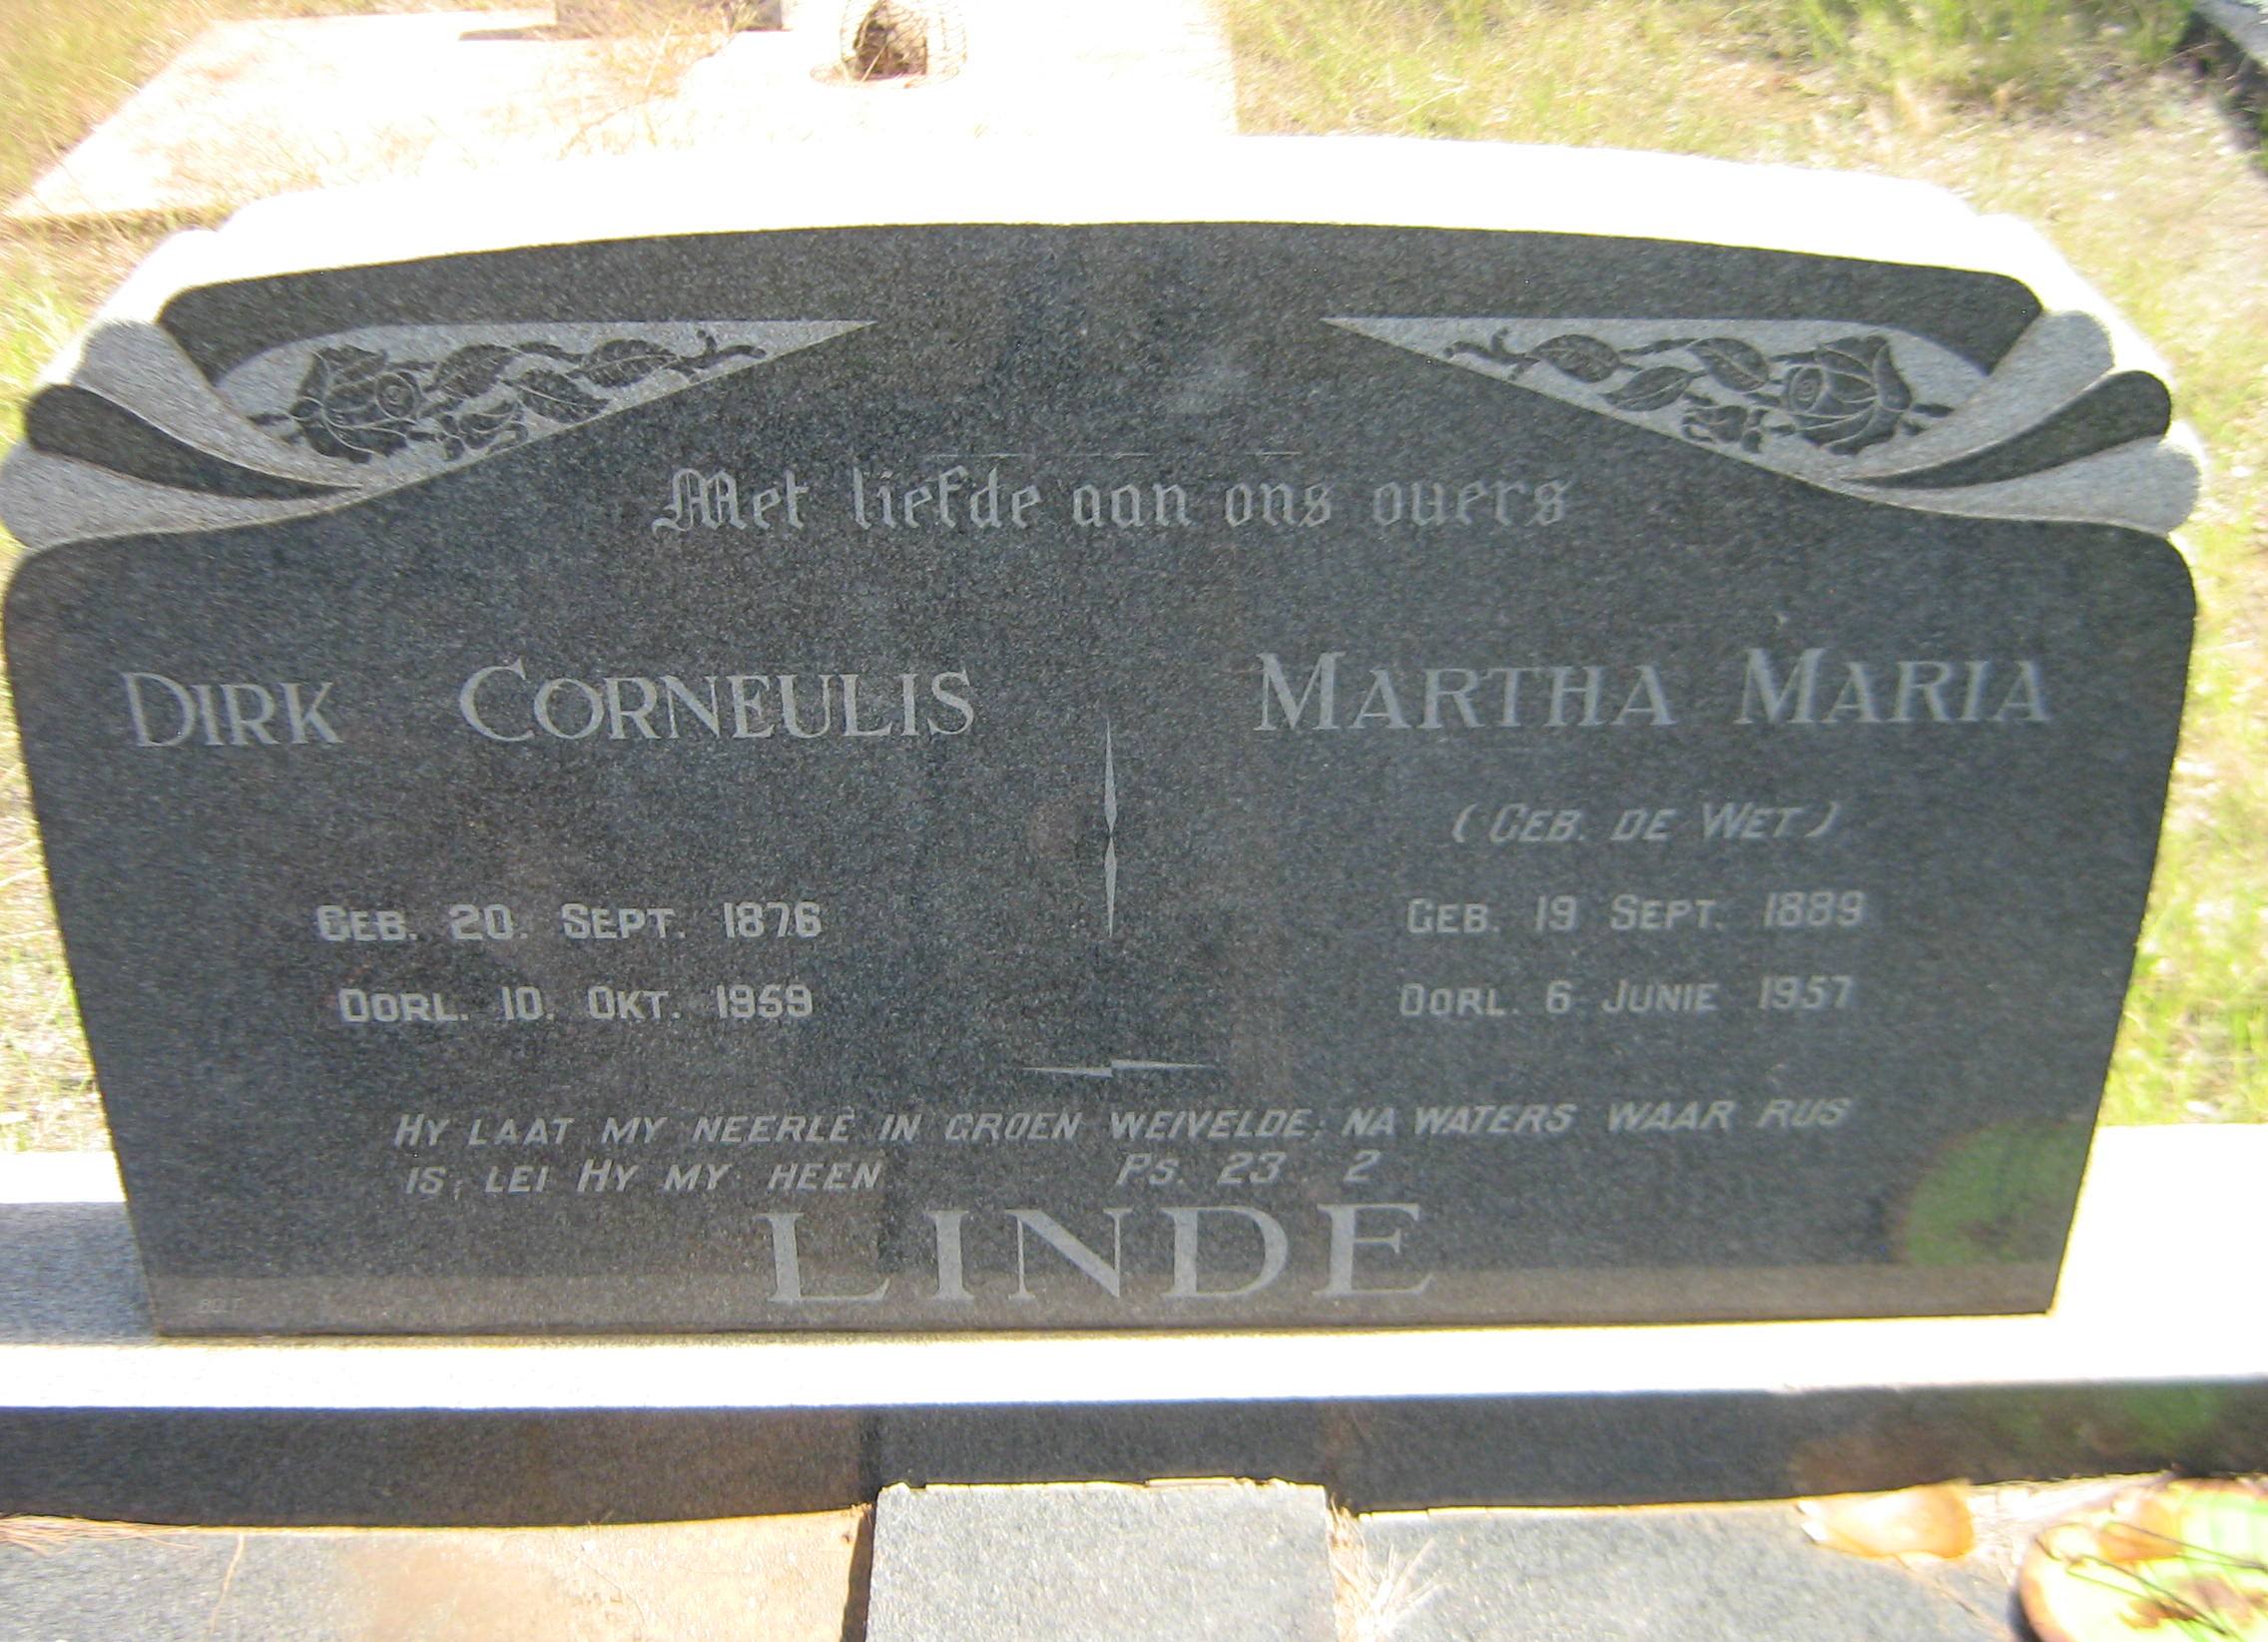 LINDE Dirk Corneulis 1876-1959 & Martha Maria DE WET 1889-1957